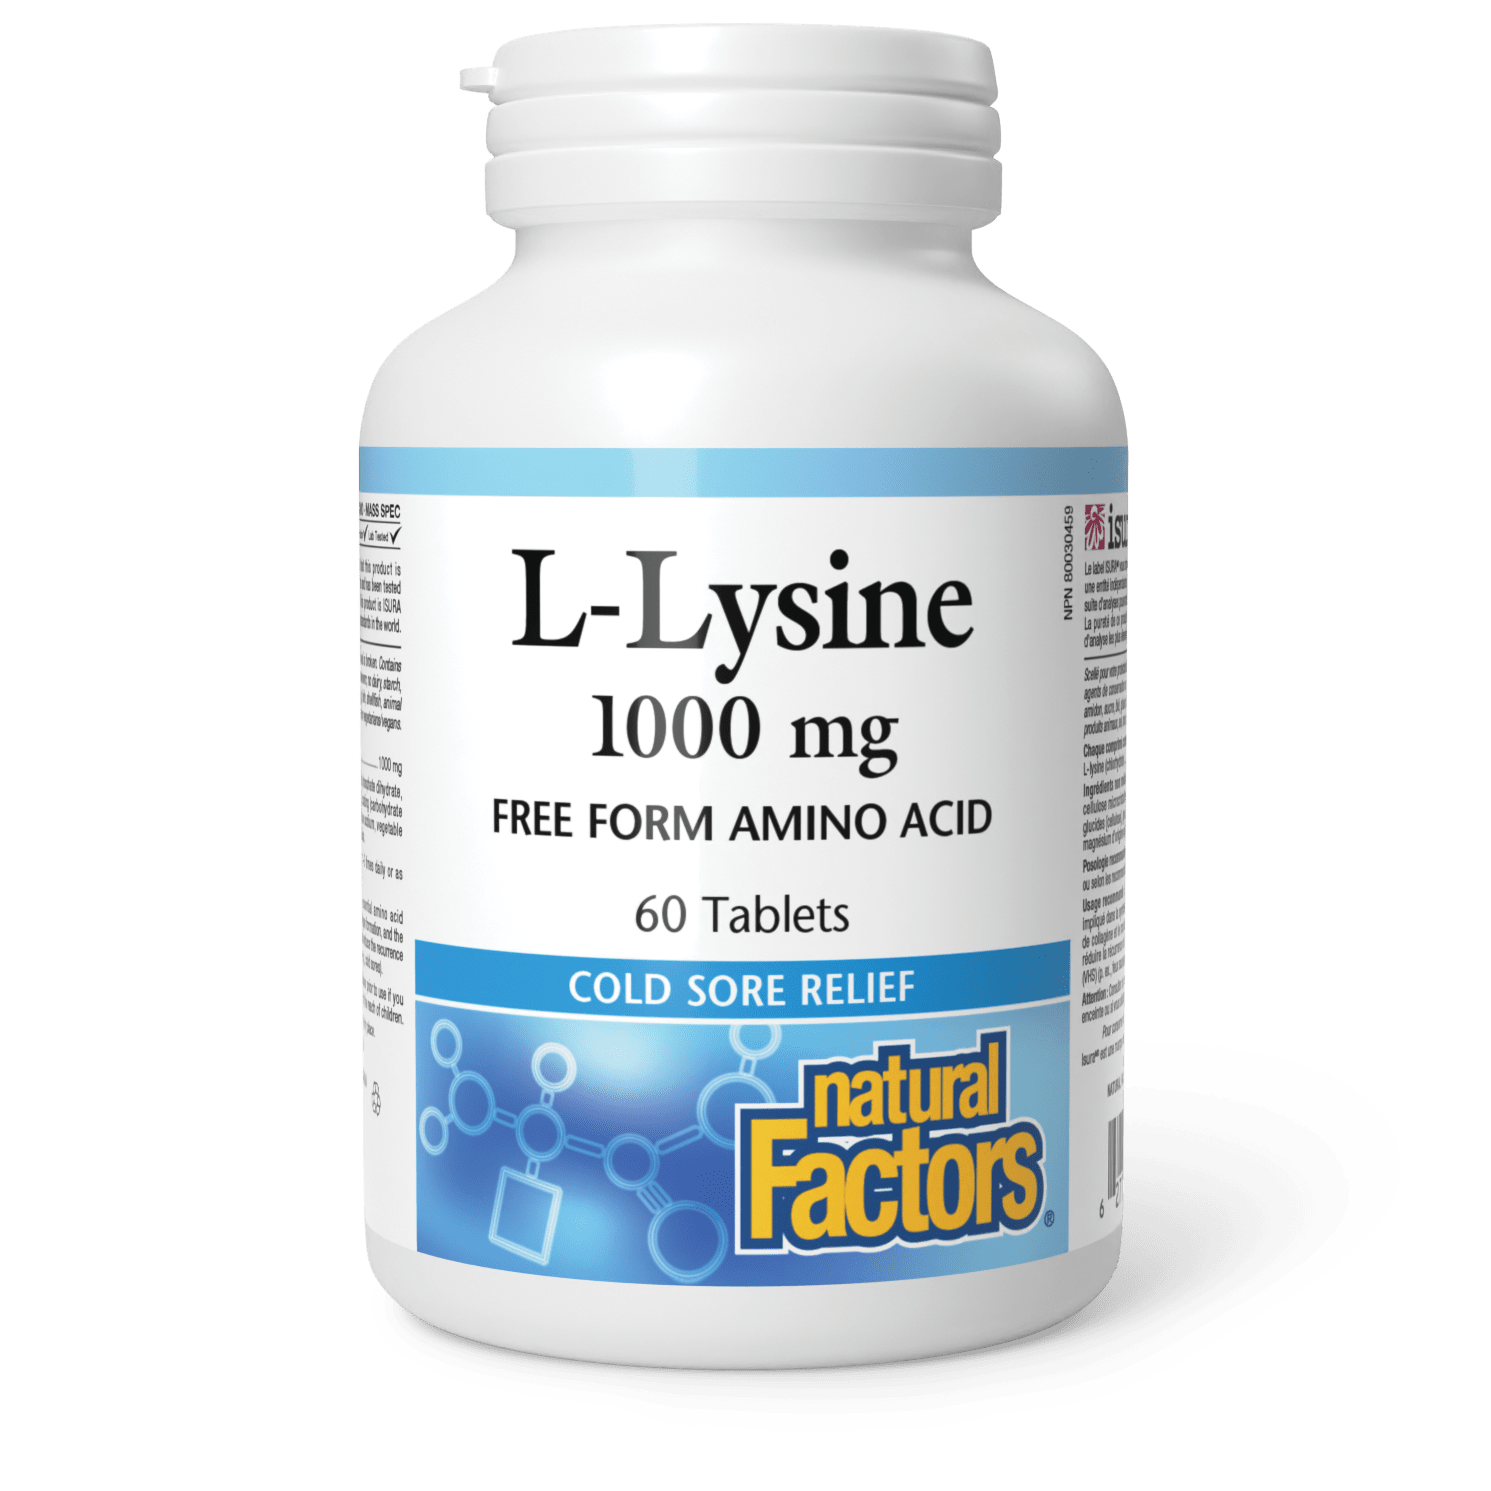 L-Lysine 1000 mg, Natural Factors|v|image|2859